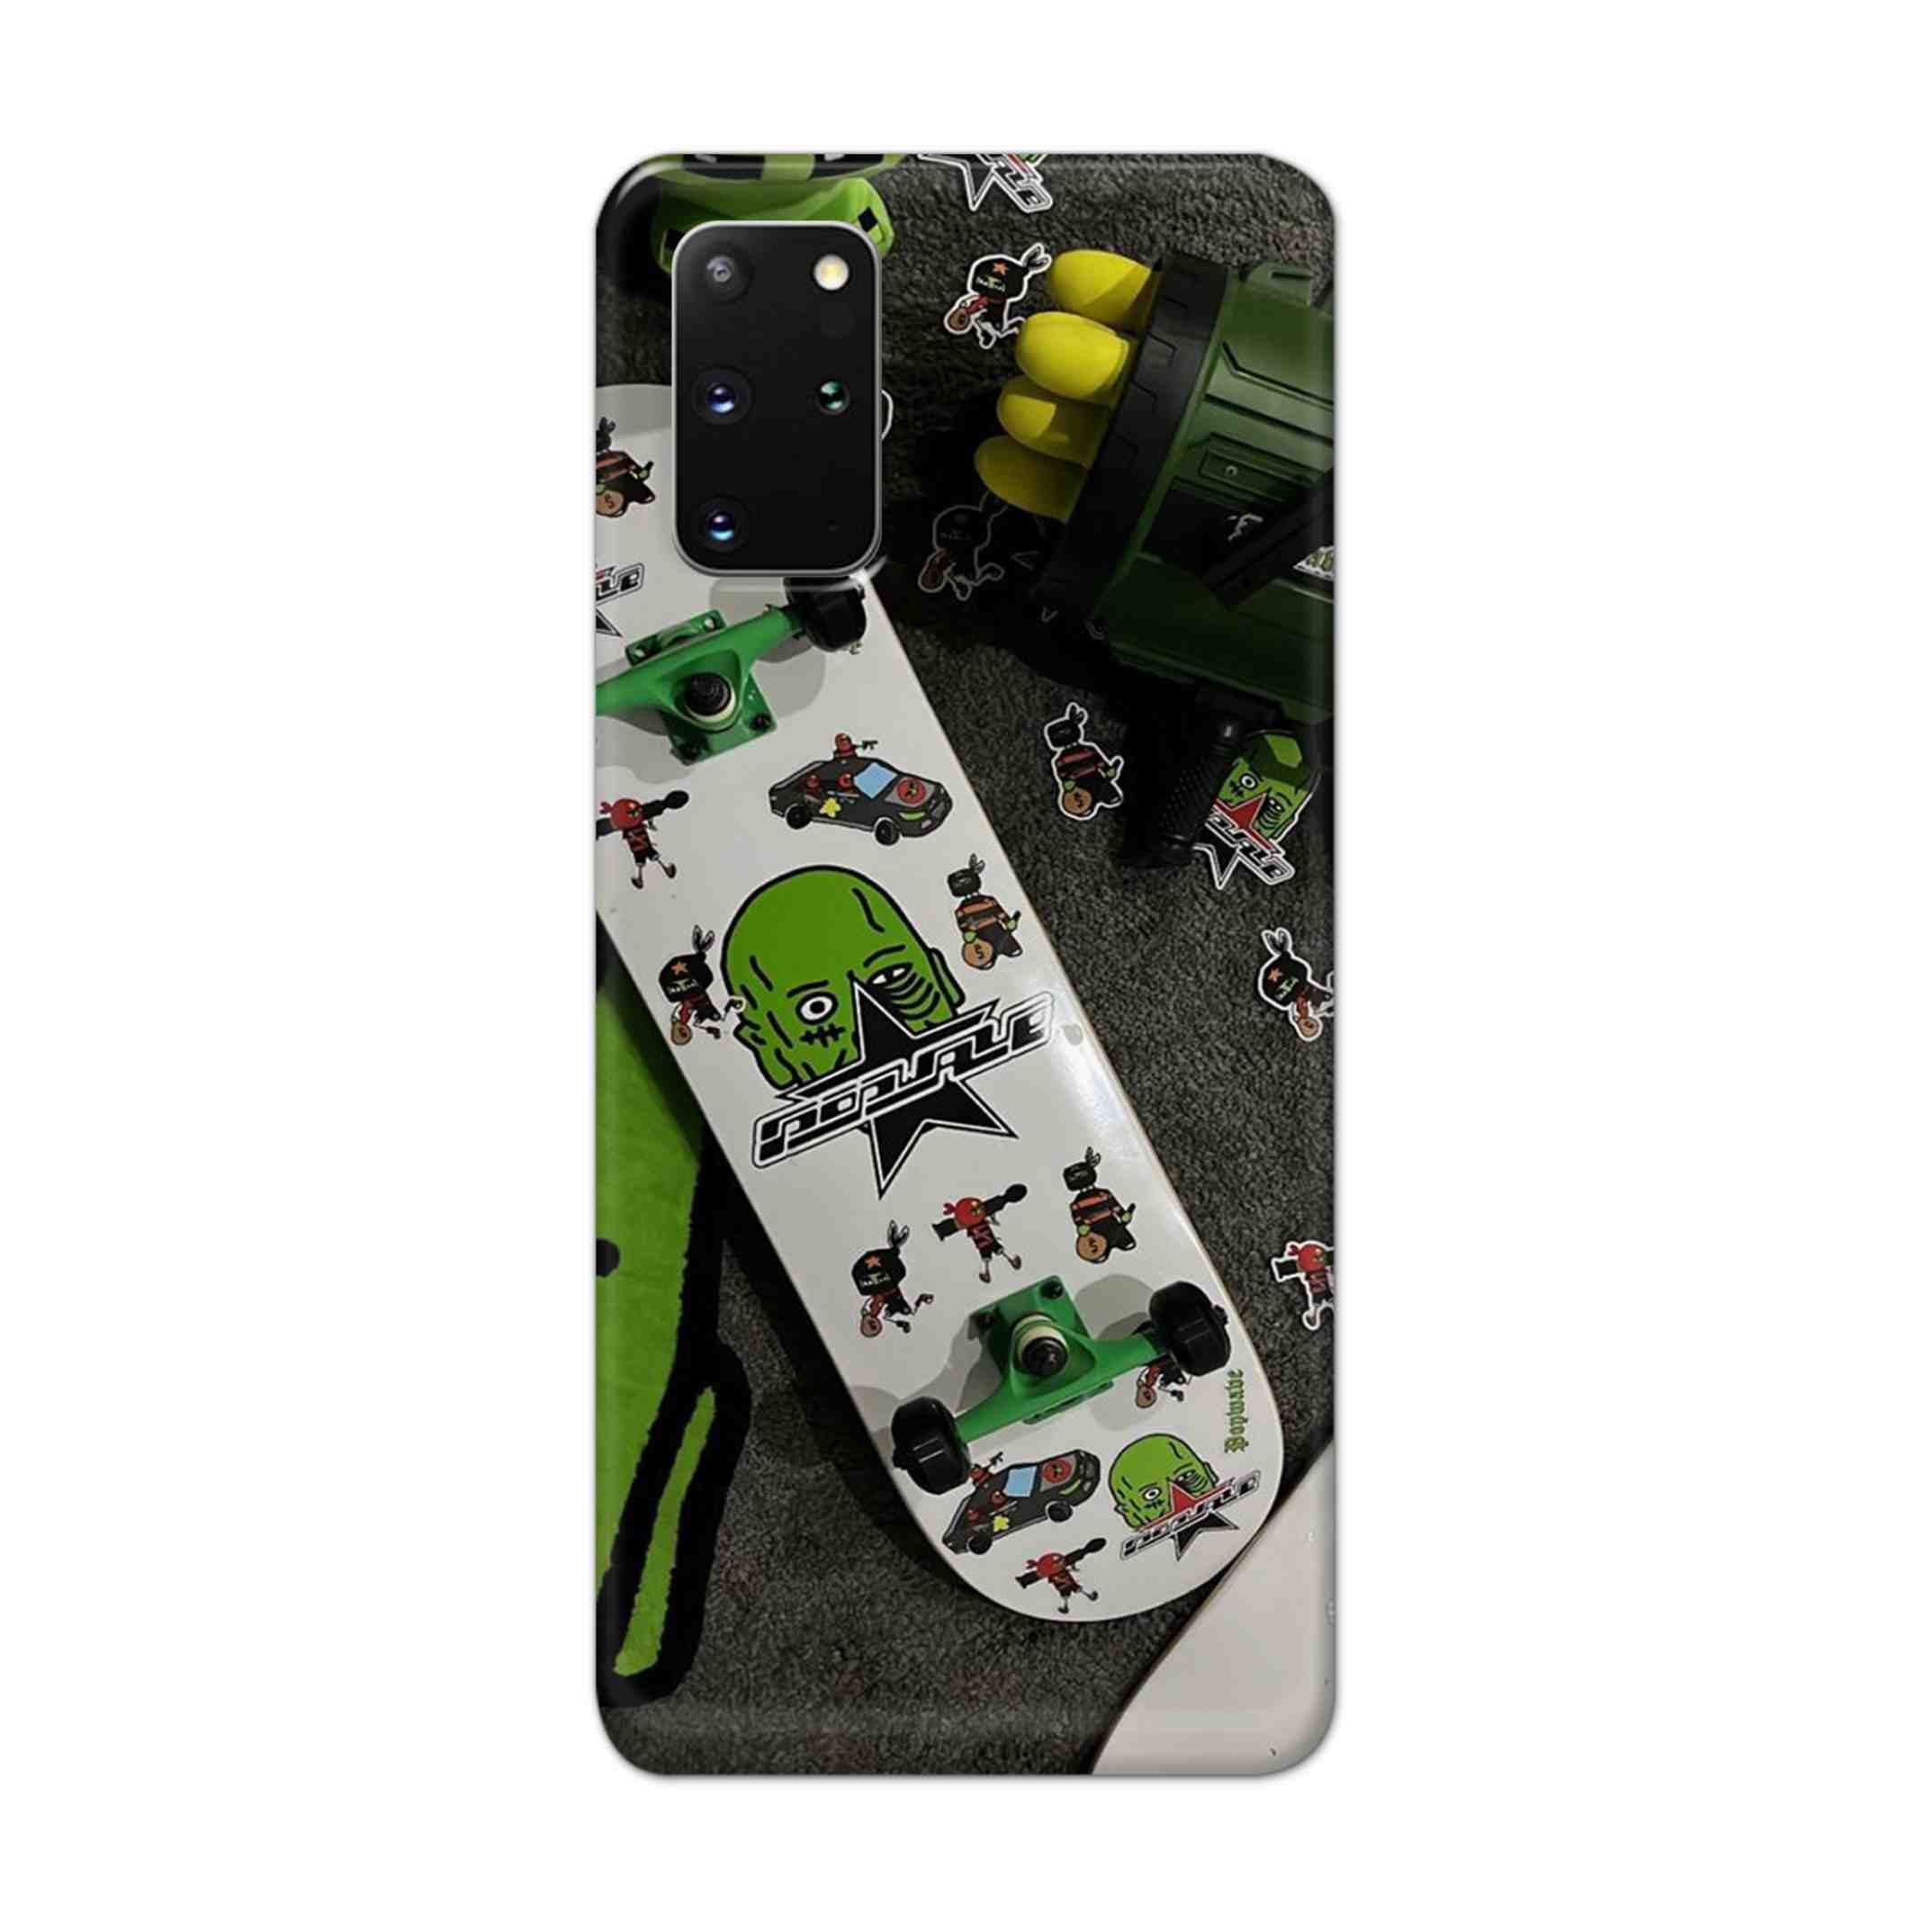 Buy Hulk Skateboard Hard Back Mobile Phone Case Cover For Samsung Galaxy S20 Plus Online